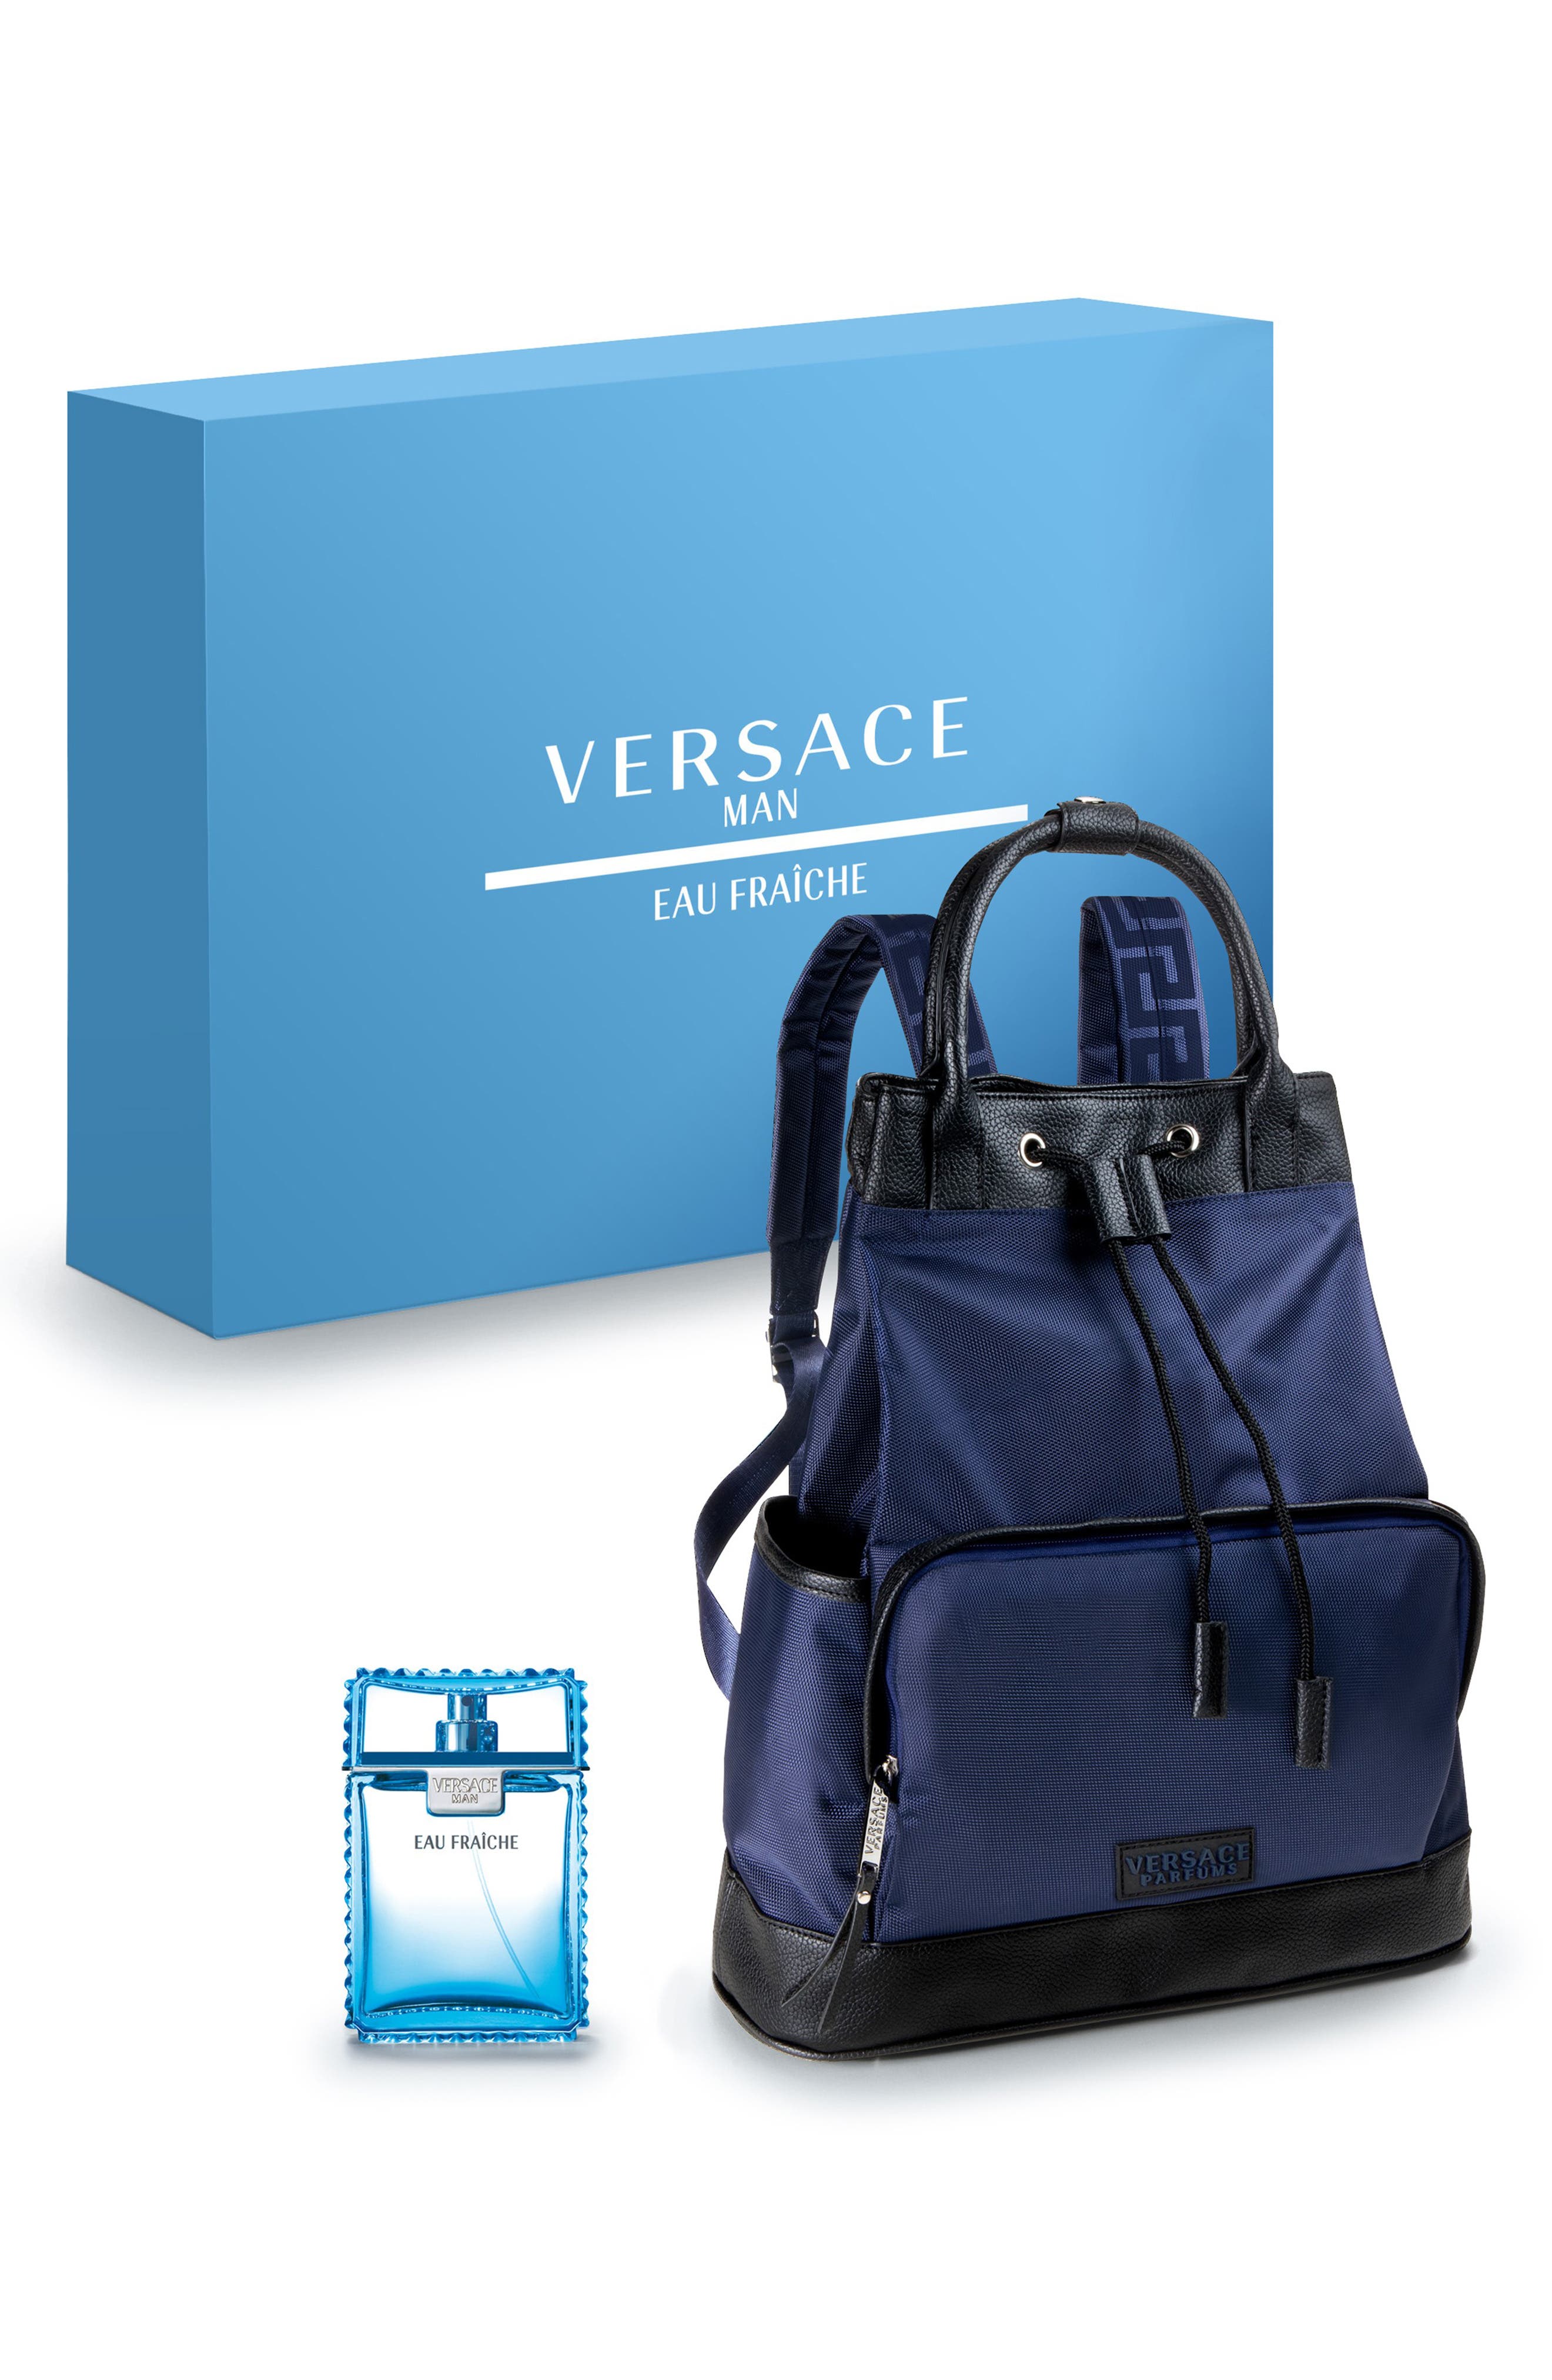 versace cologne gift set backpack